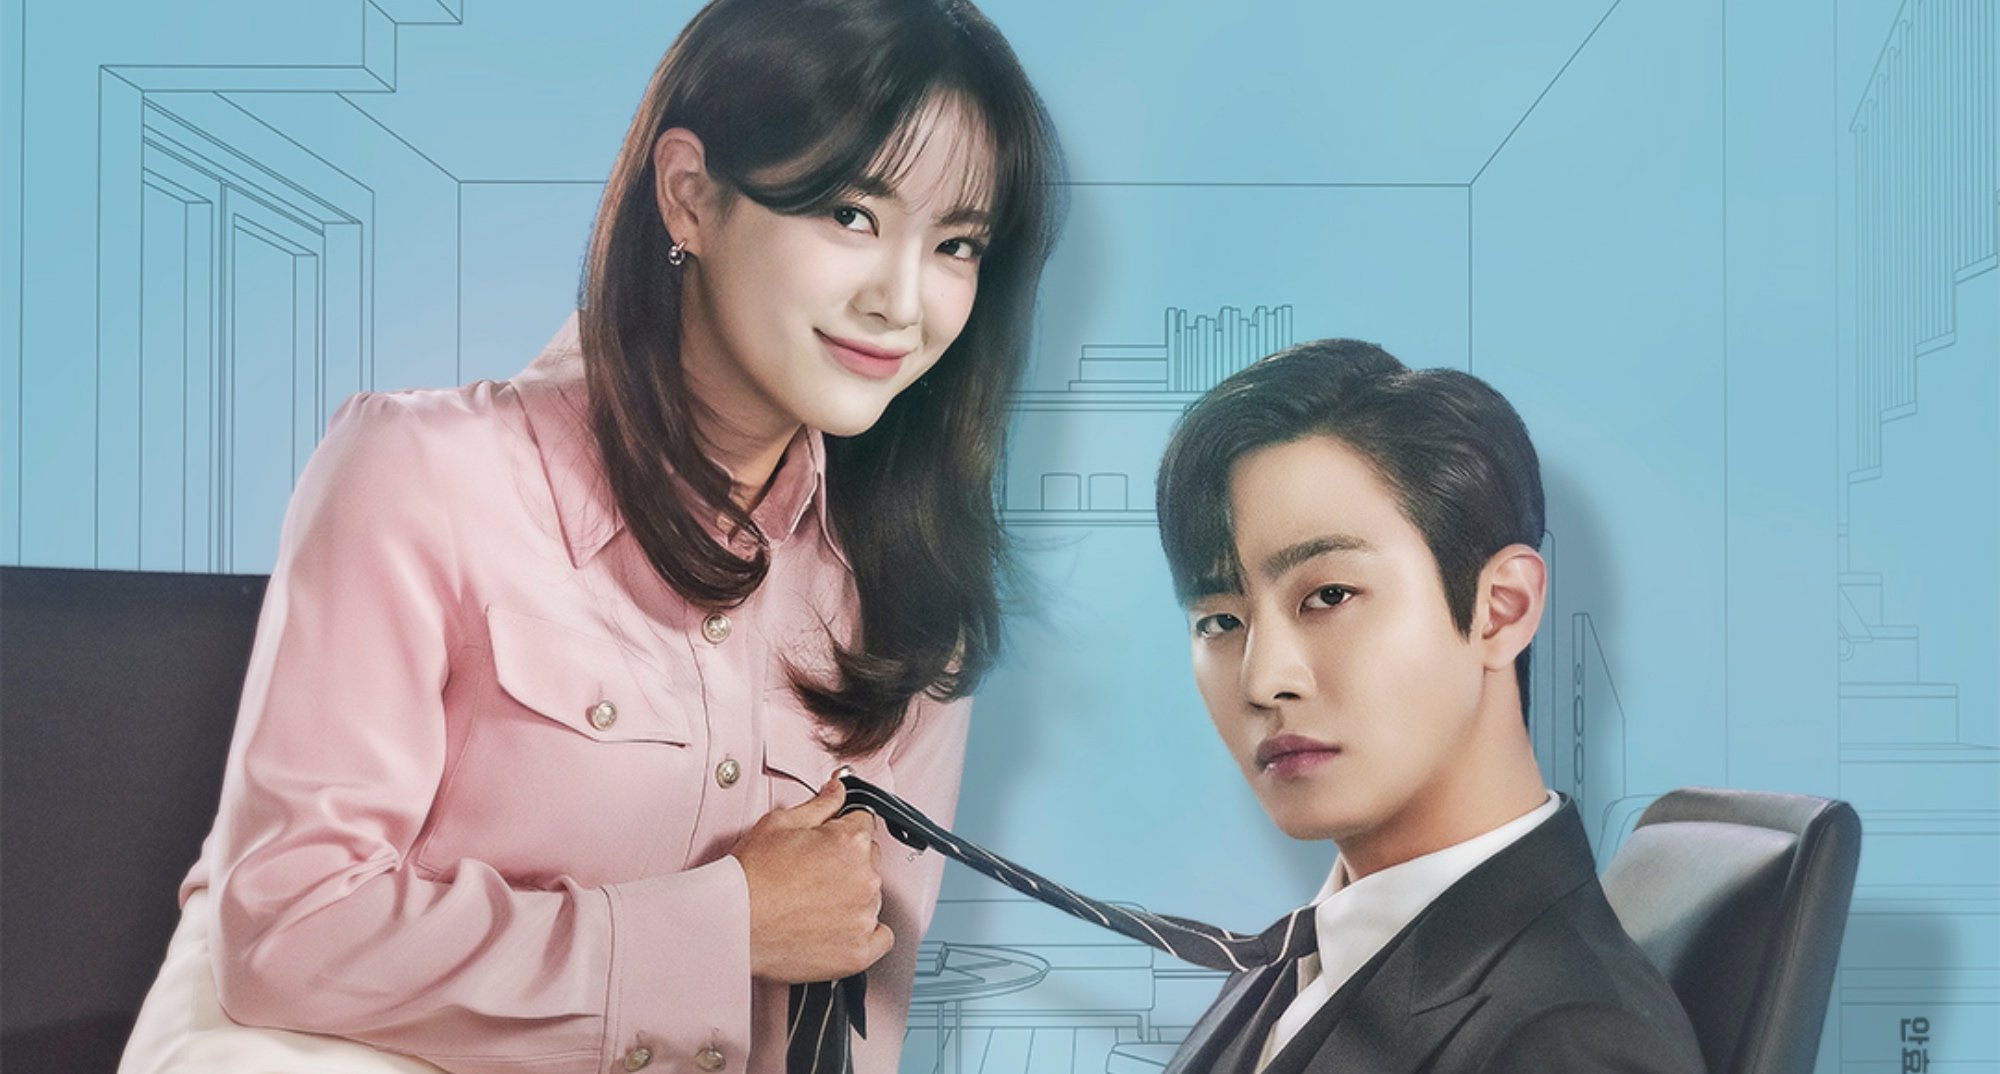 Character Ha-ri and Tae-mu in 'Business Proposal' K-drama wearing work clothes.